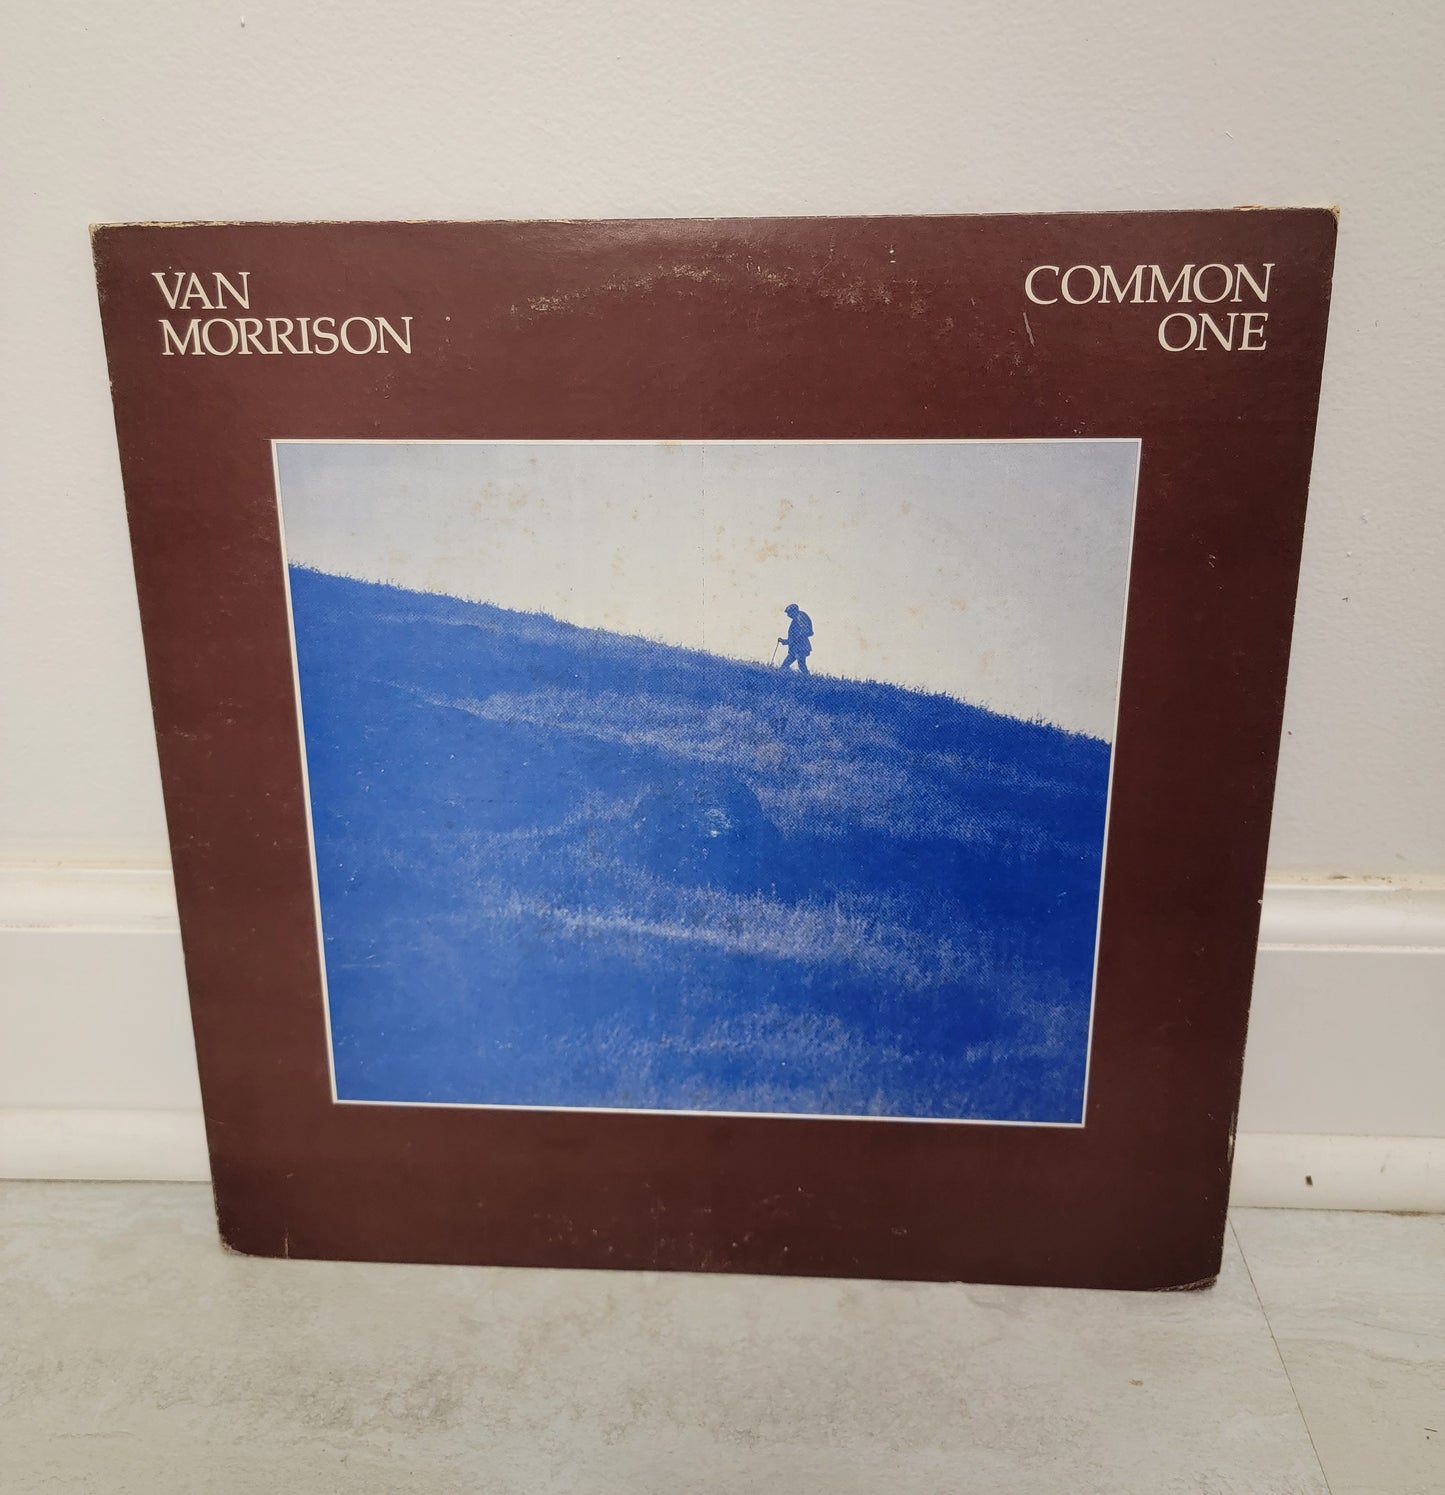 Van Morrison "Common One" Taiwan Pressing Record Album With Lyric Sheet